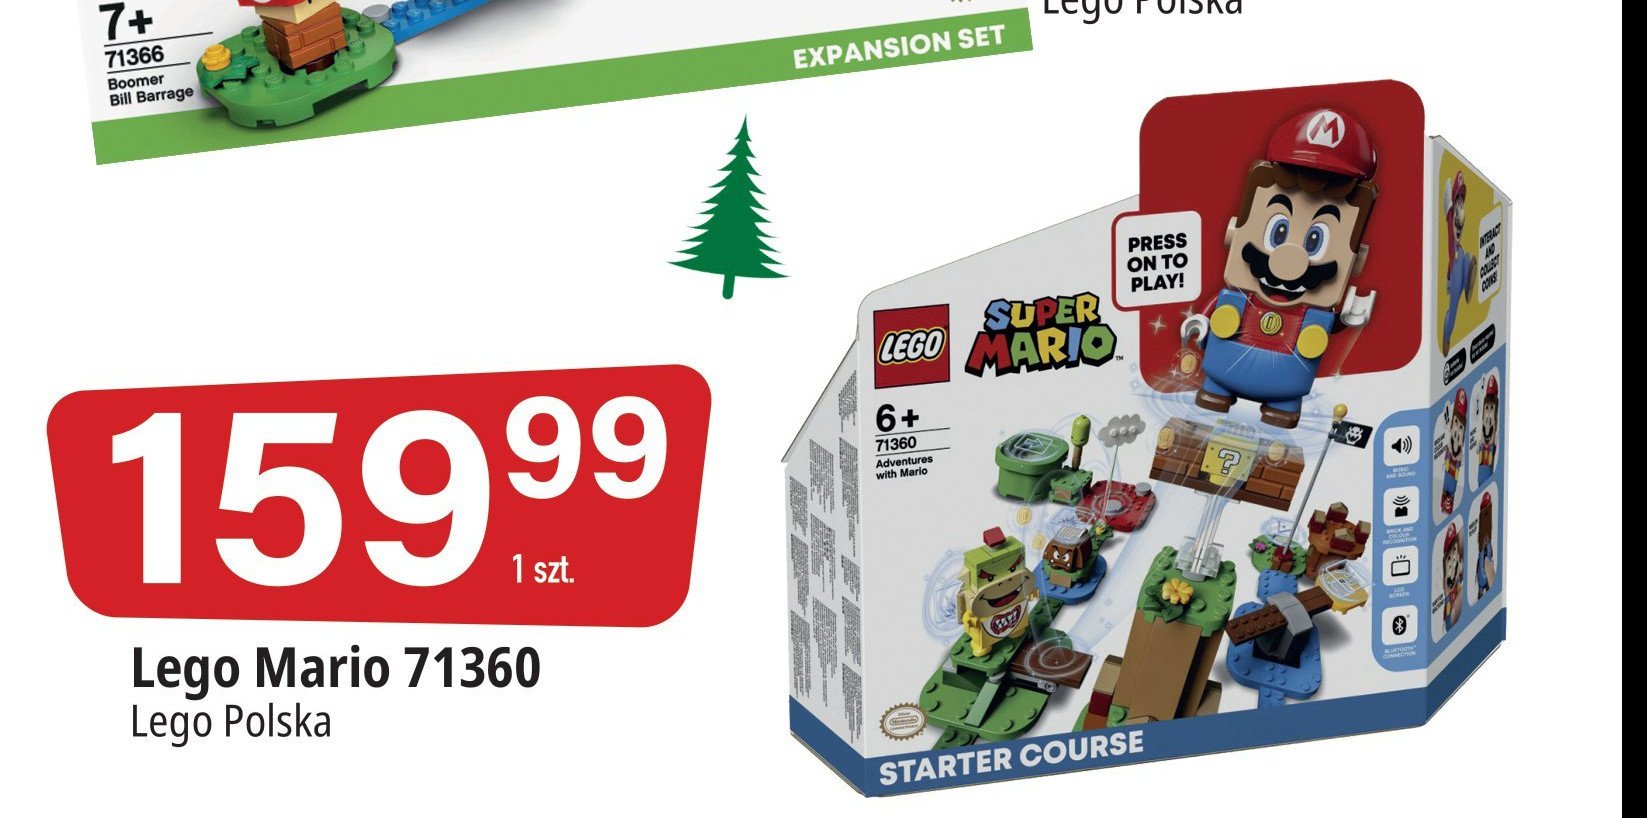 Klocki 71360 Lego super mario promocja